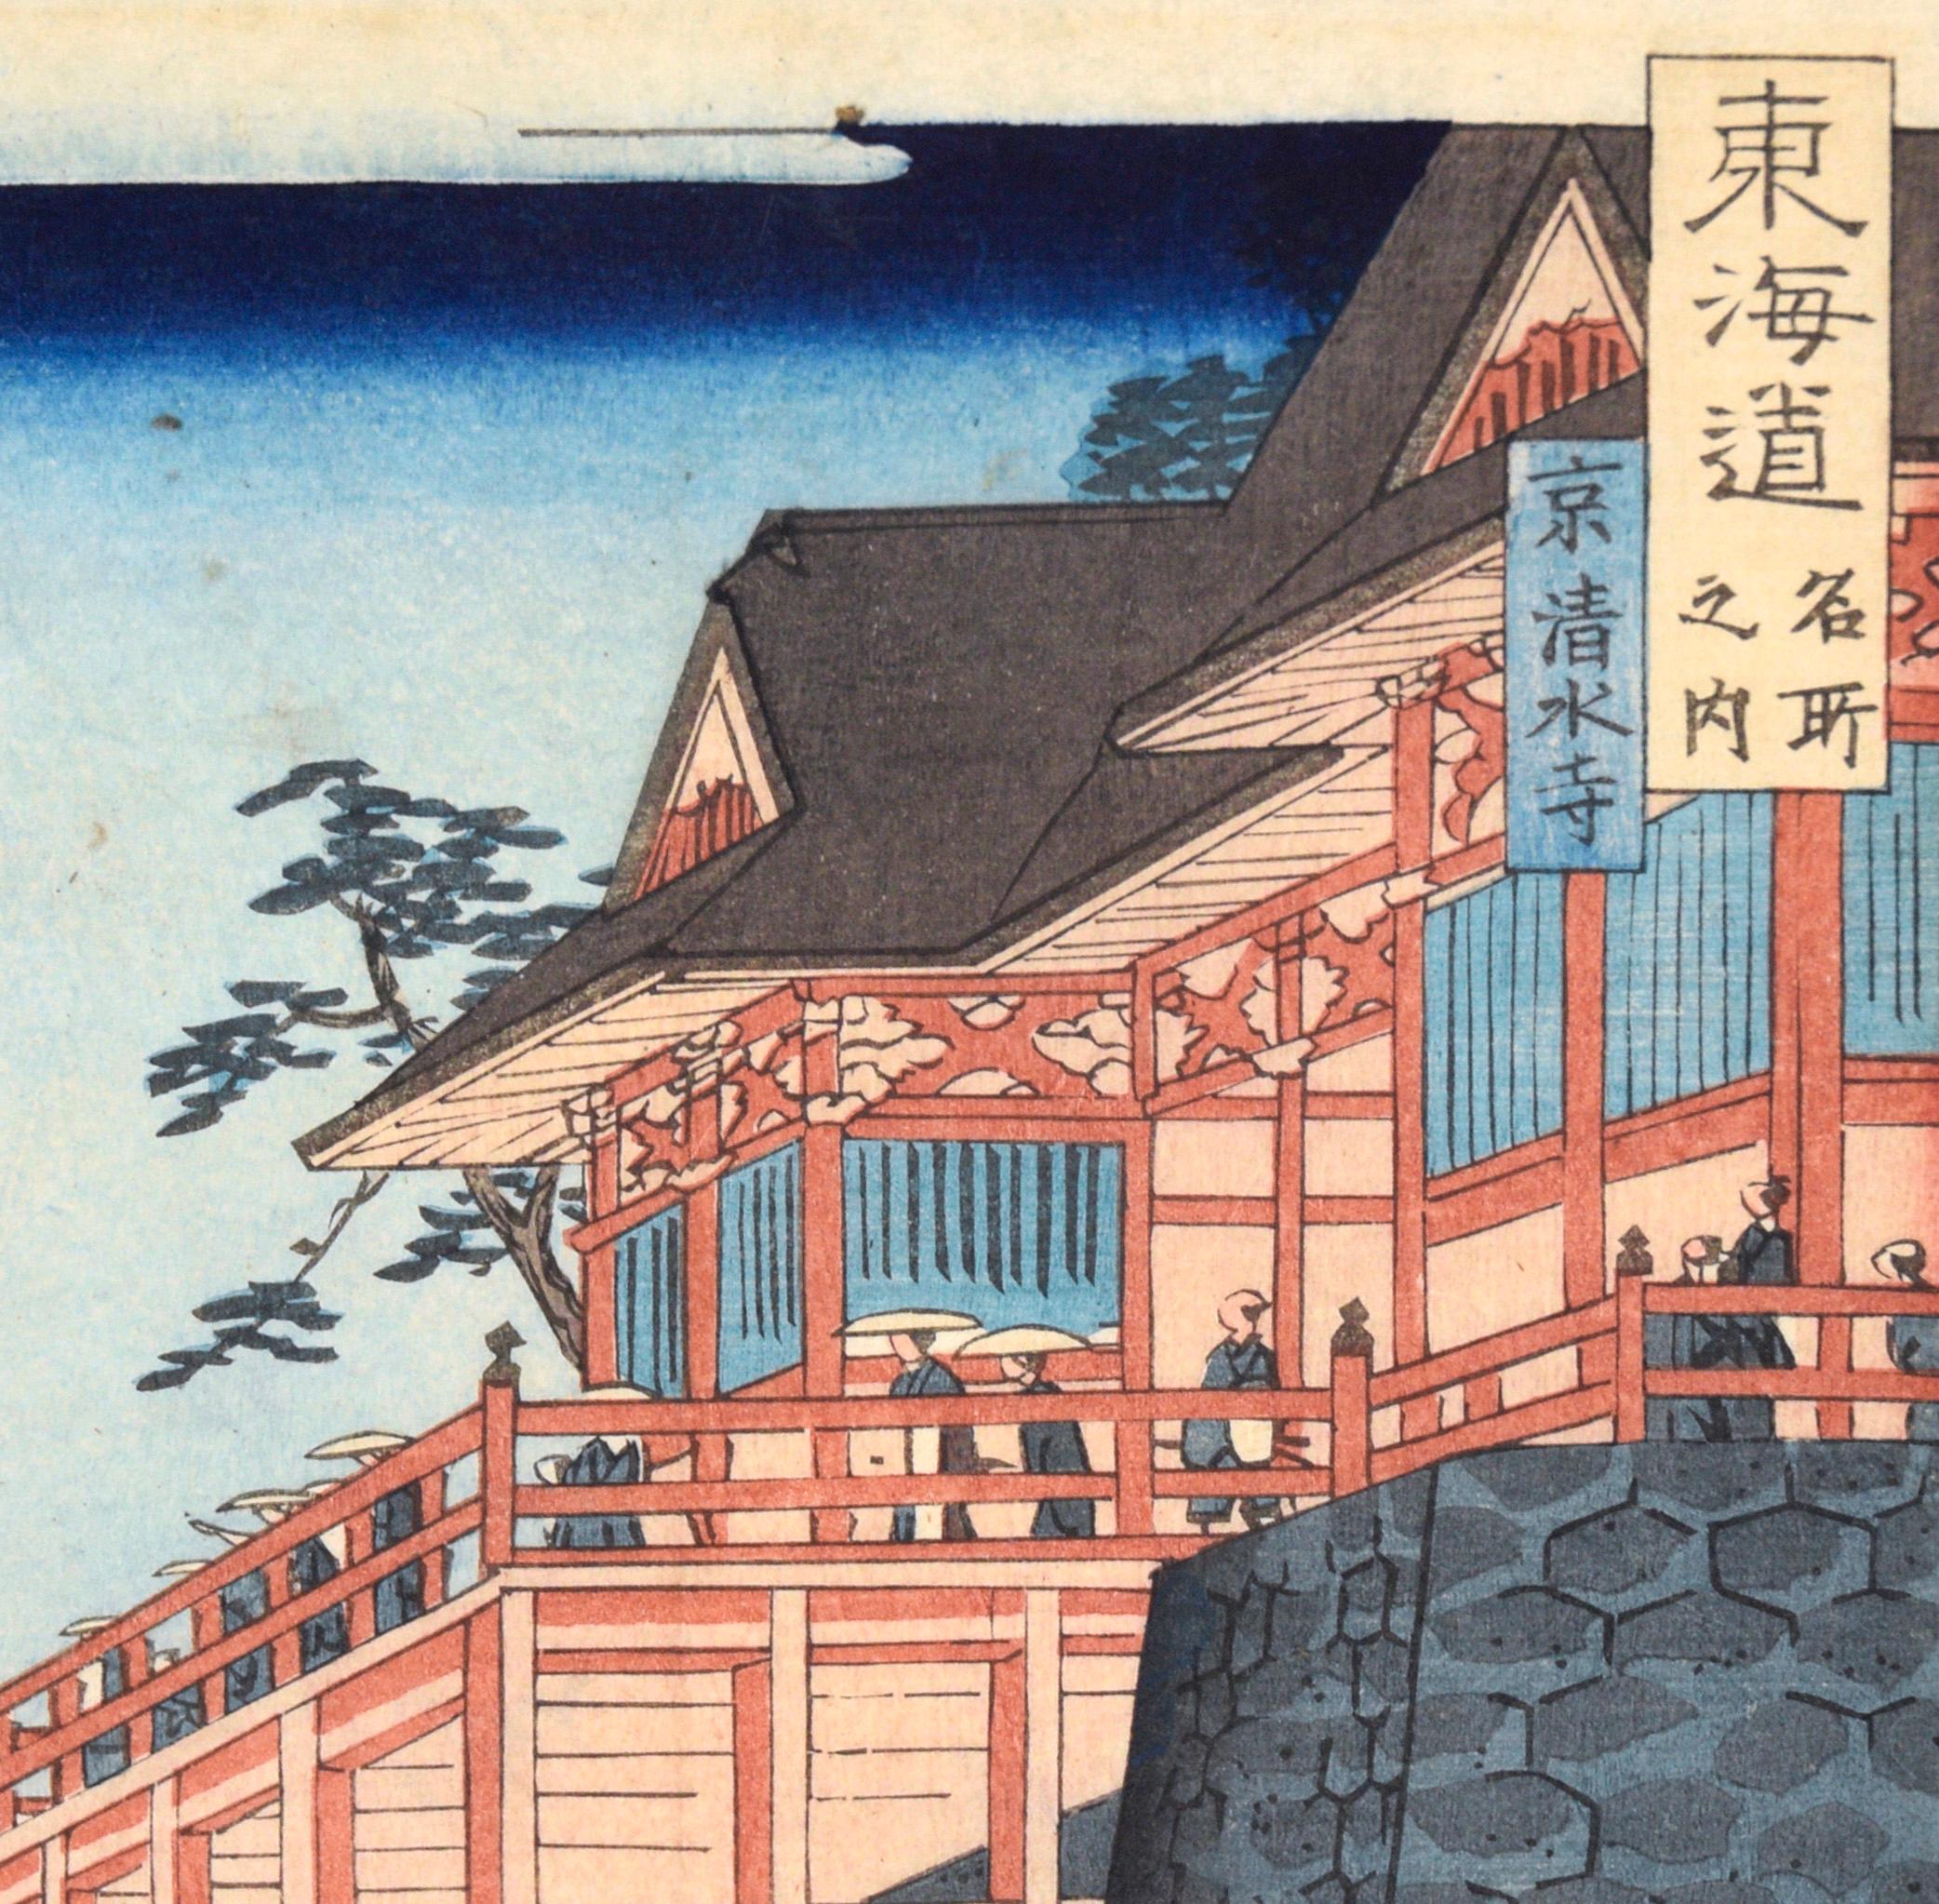 Kiyomizu-Tempel, Szenen berühmter Orte entlang der Tôkaidô-Straße - Holzschnitt auf Papier

Vollständiger Titel:
Kyoto: Kiyomizu-Tempel (Kyô Kiyomizudera), aus der Serie Szenen berühmter Orte entlang der Tôkaidô-Straße (Tôkaidô meisho fûkei), auch